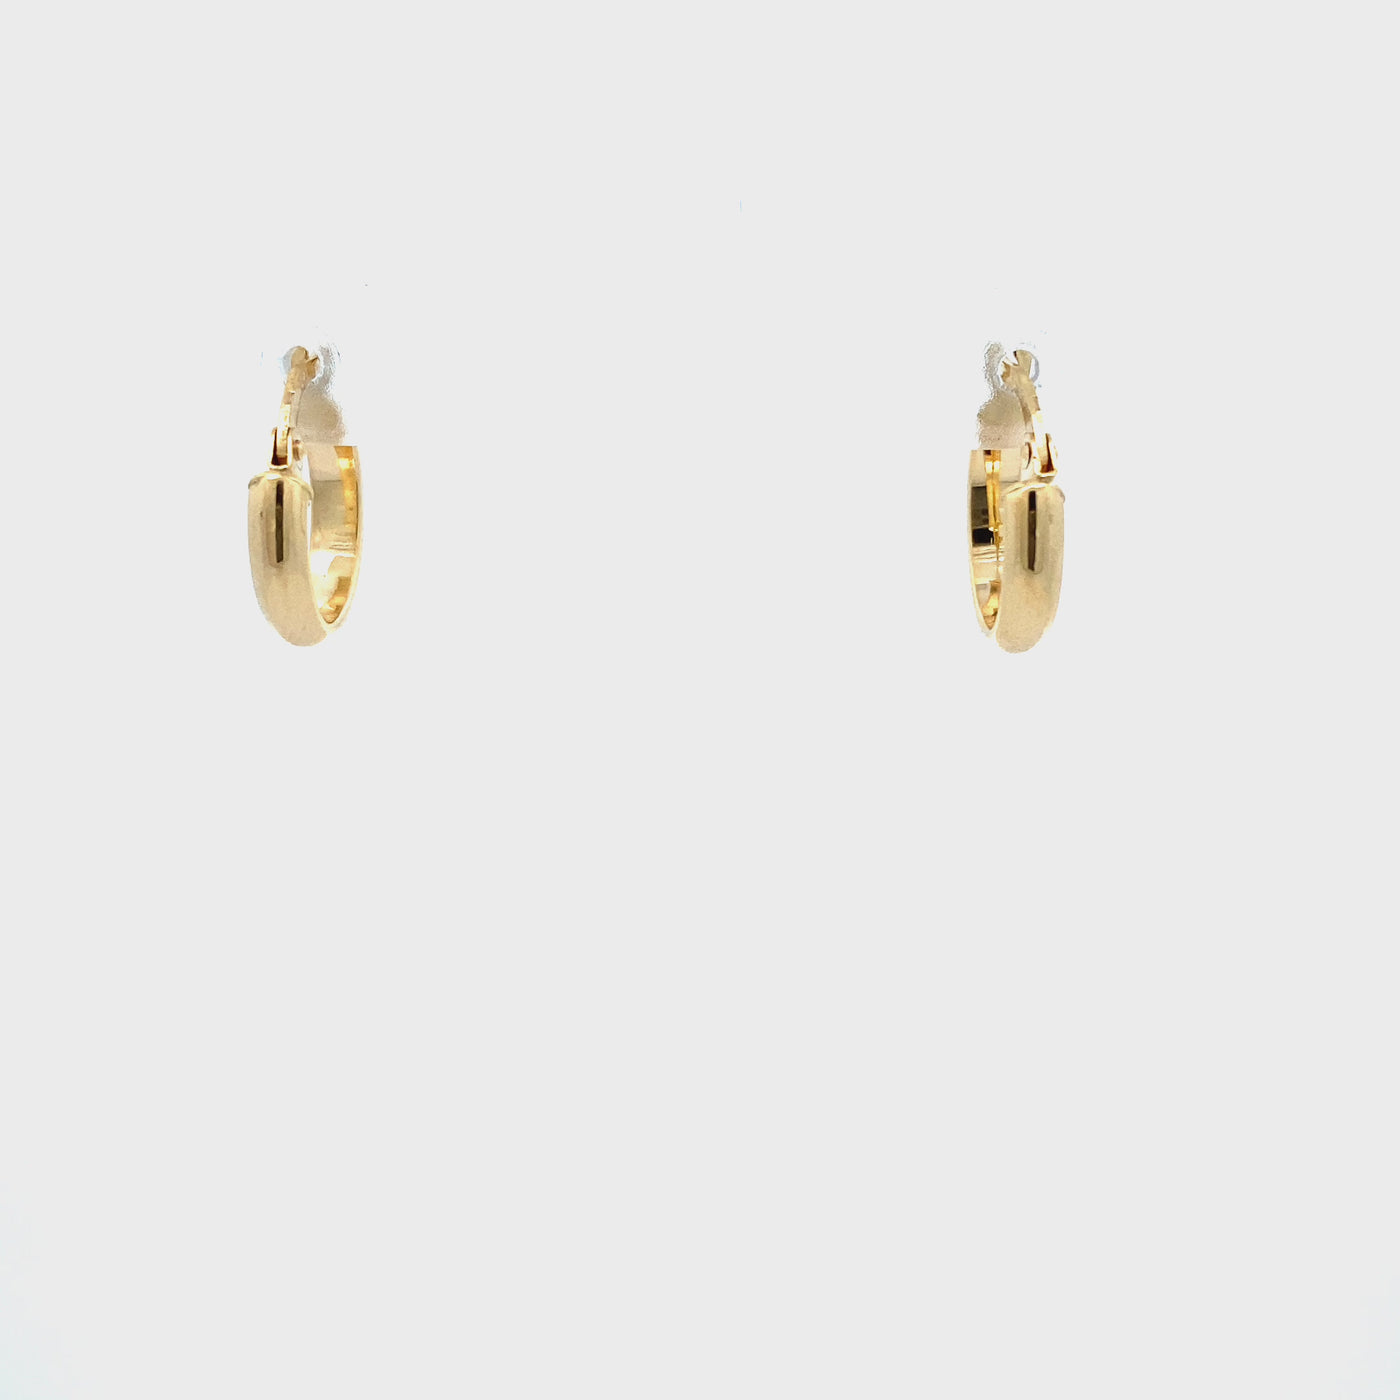 10 Karat Gold Small Hoop Earrings 10mm